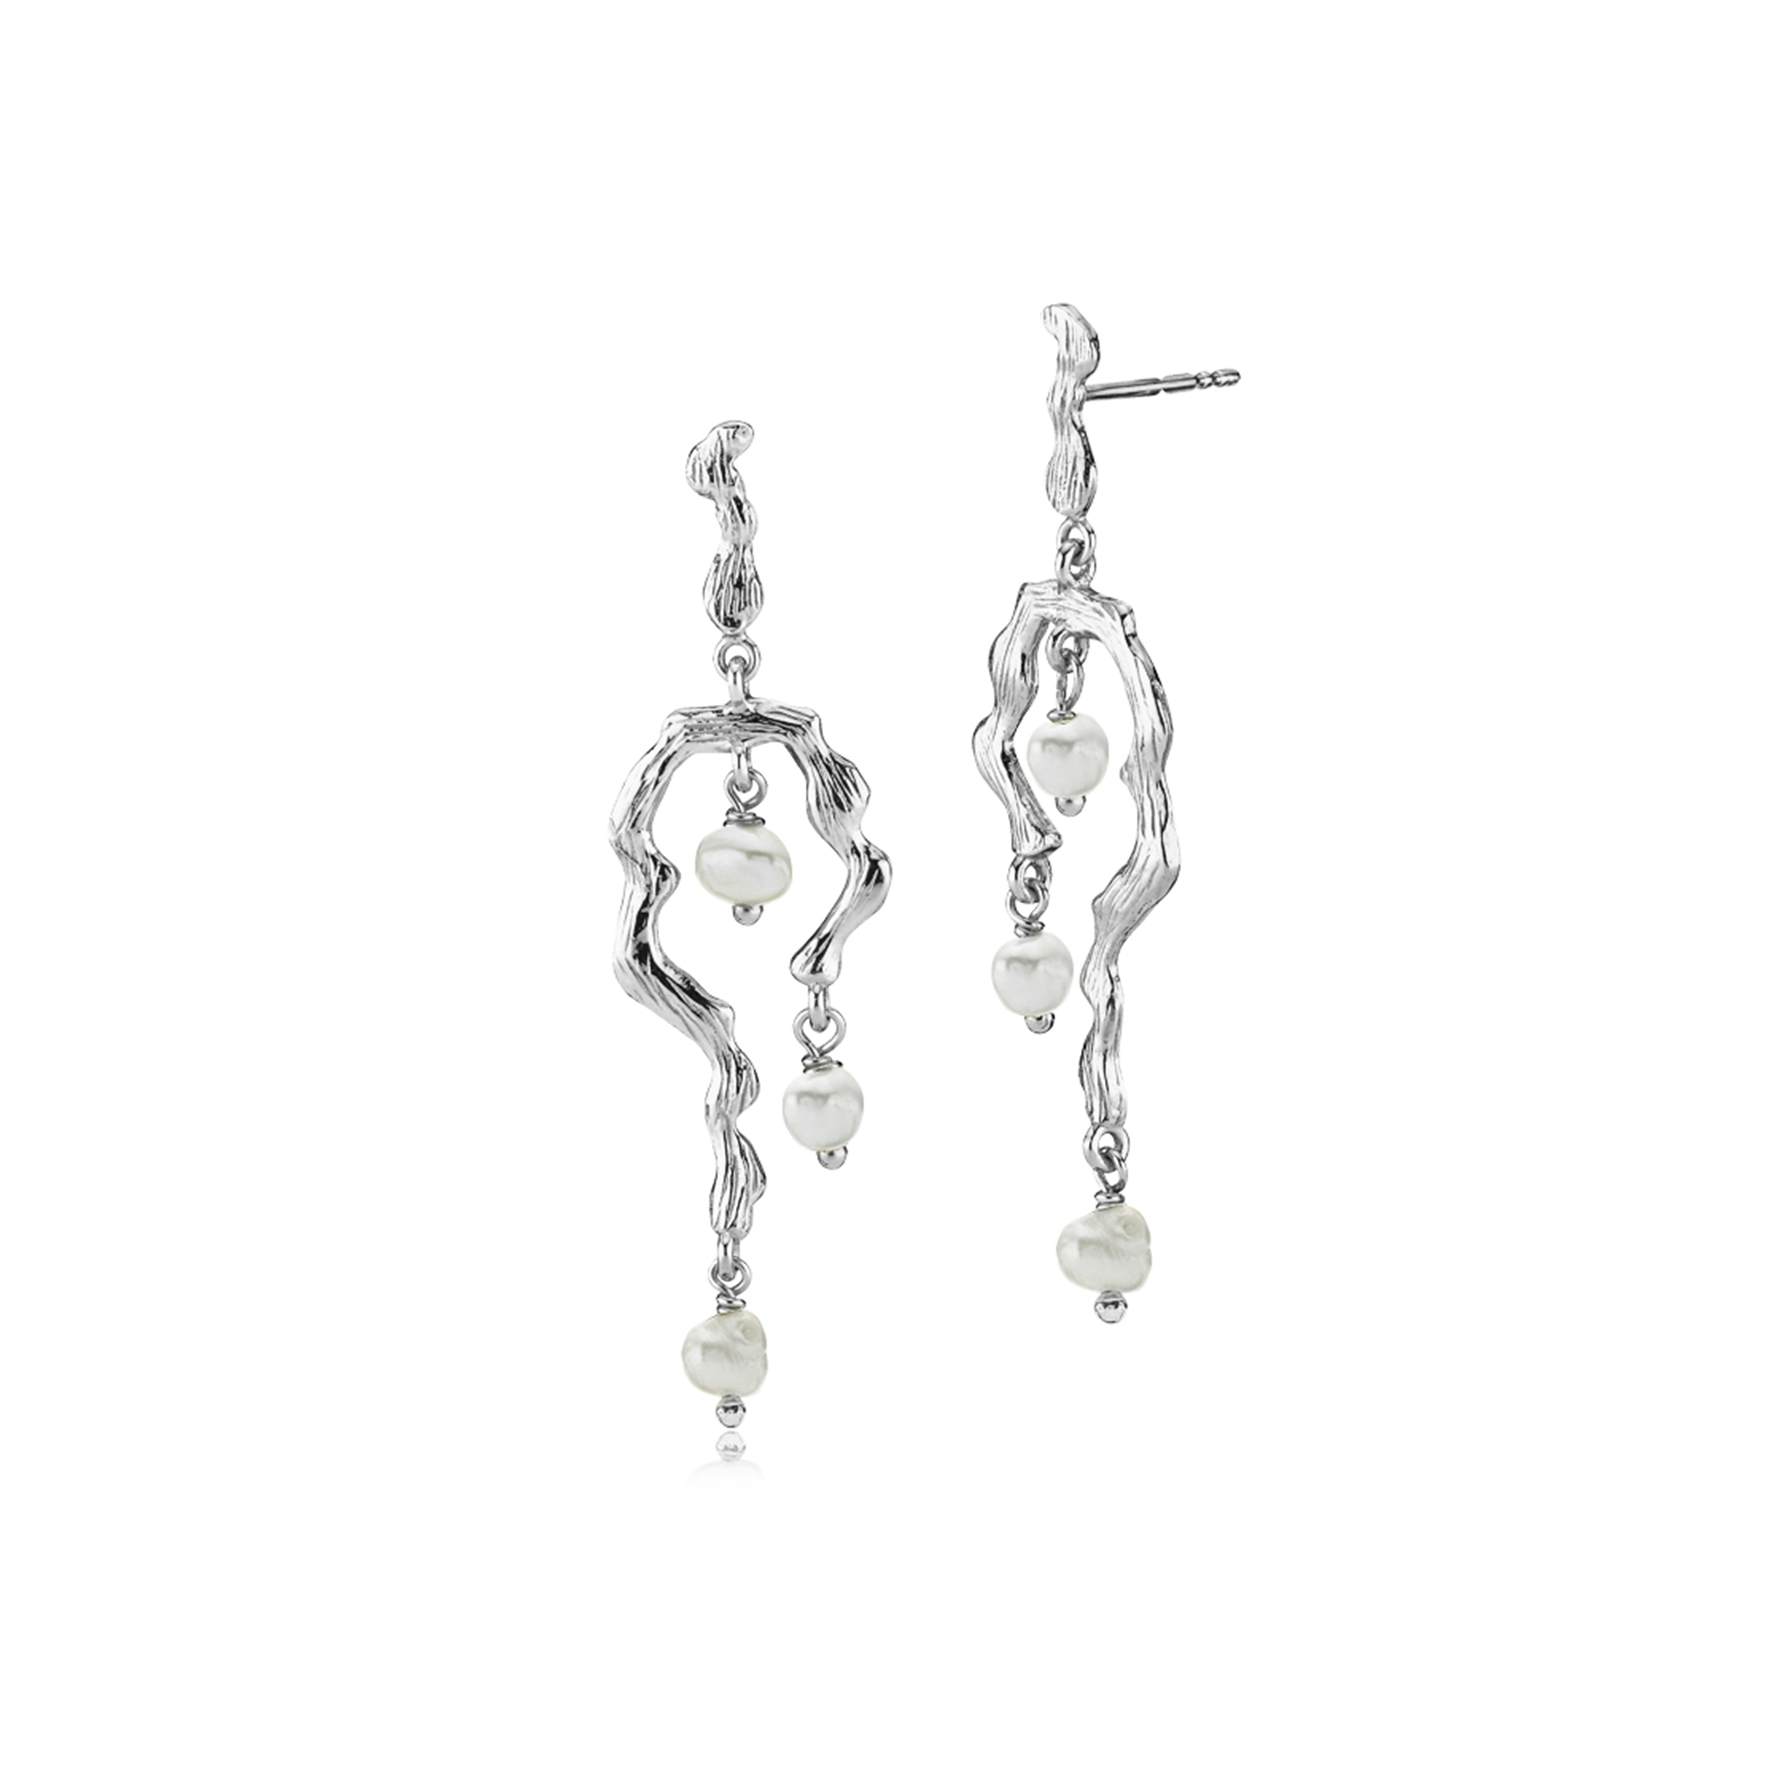 Lærke Bentsen By Sistie Long Earrings With Pearls from Sistie in Silver Sterling 925|Freshwater Pearl